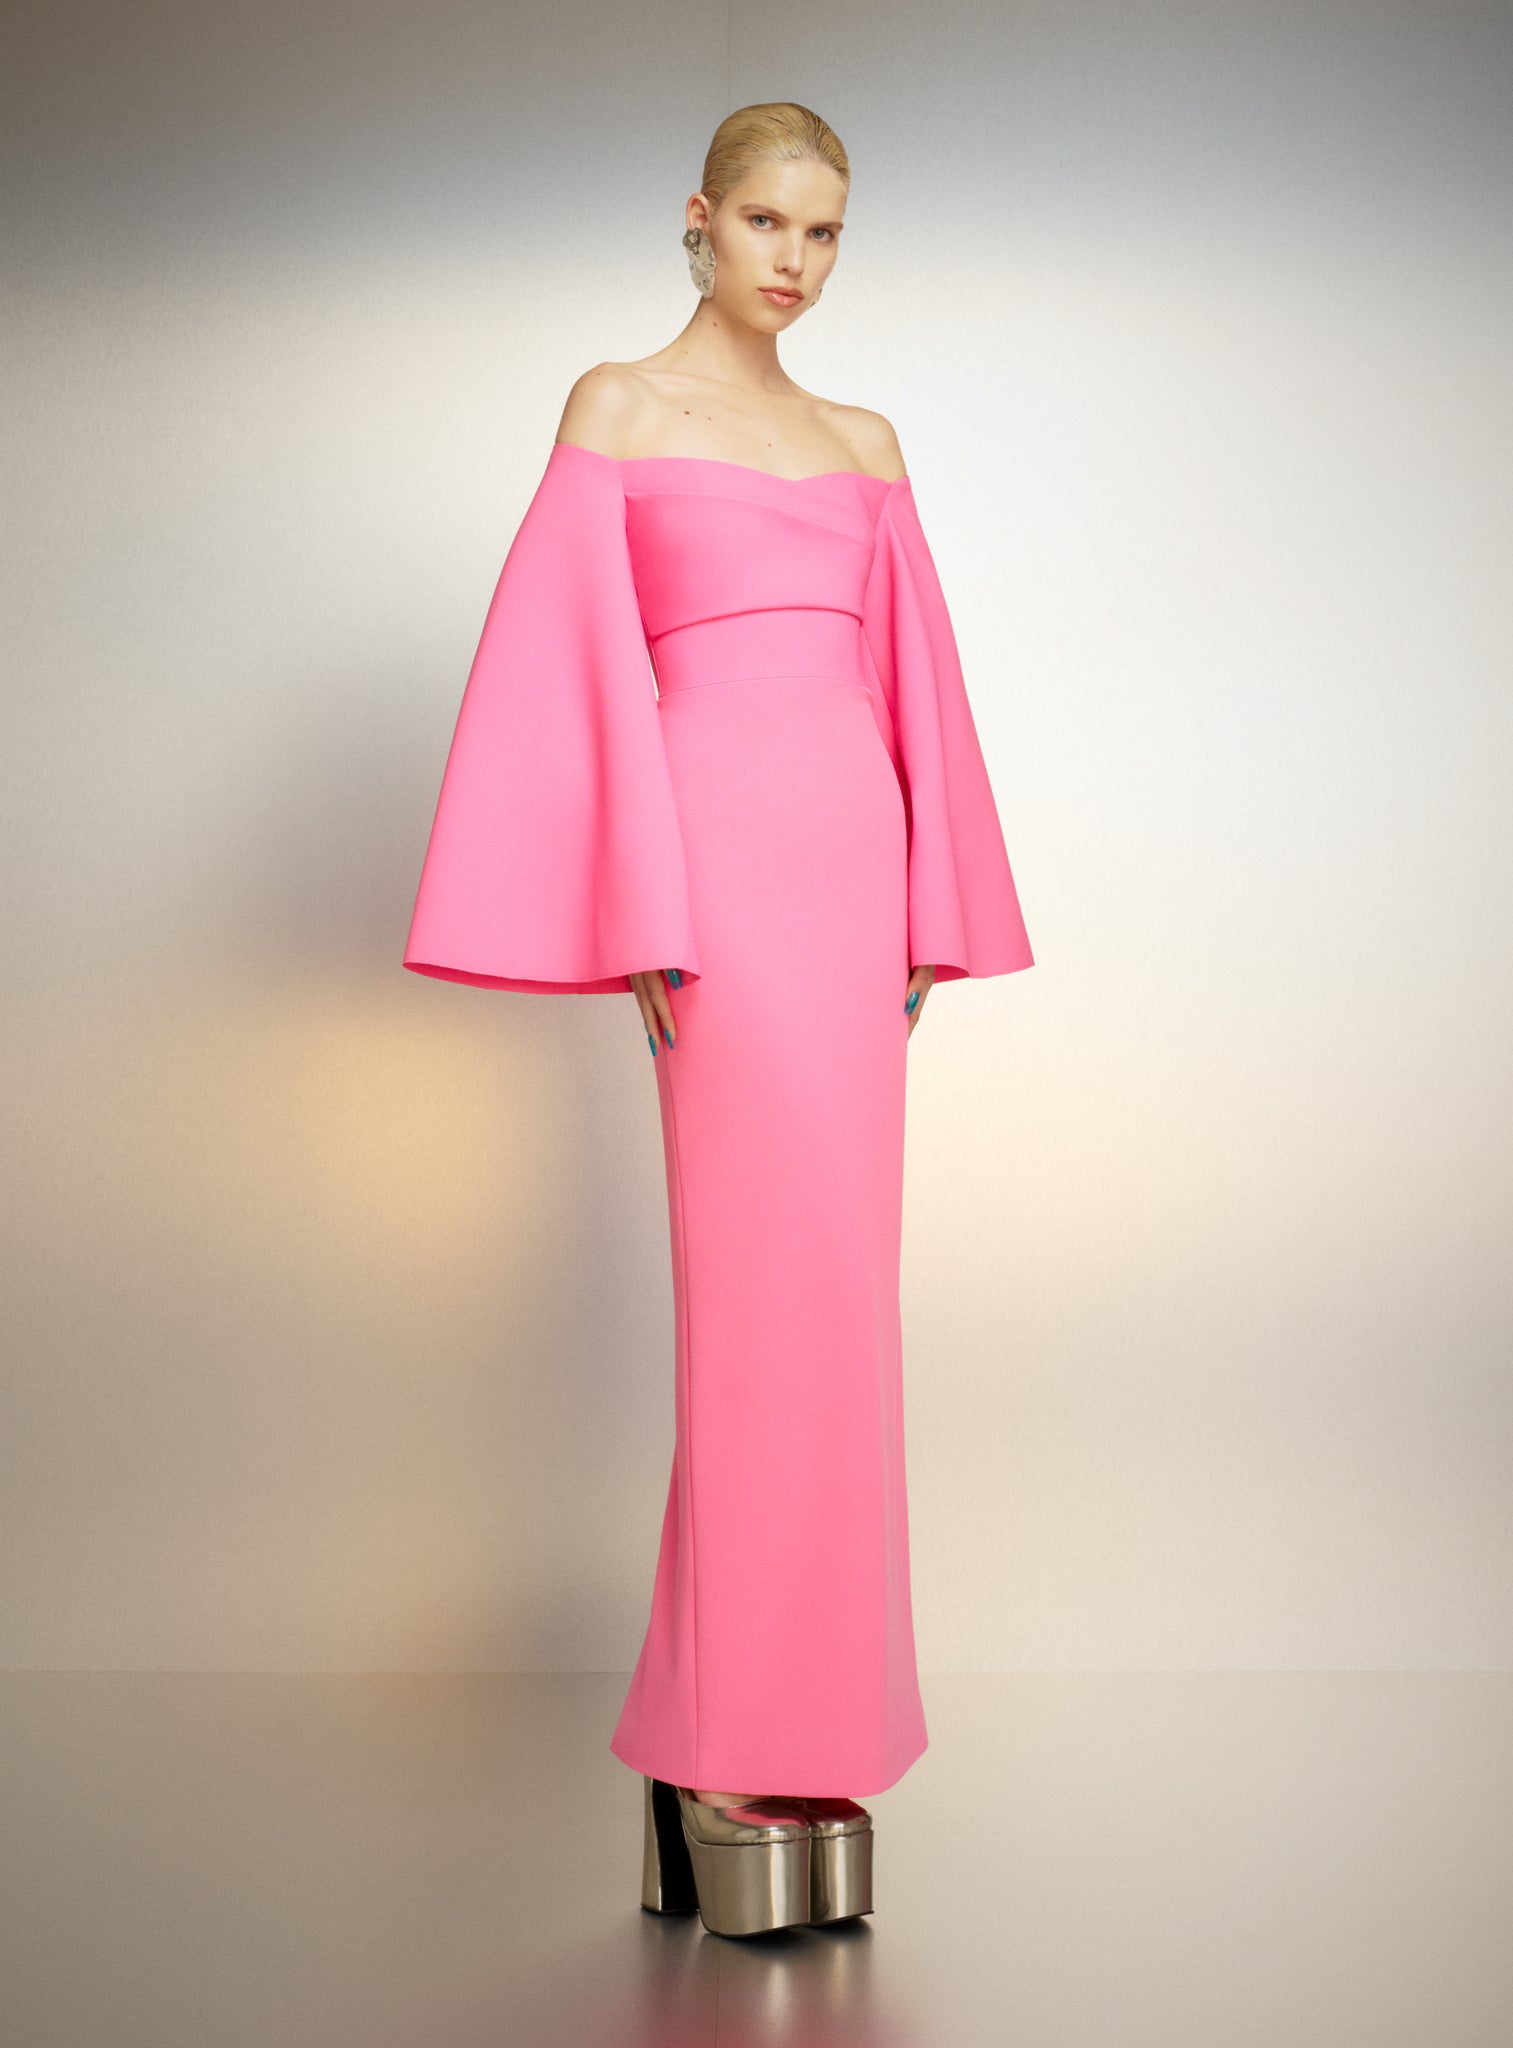 The Eliana Maxi Dress in Pink